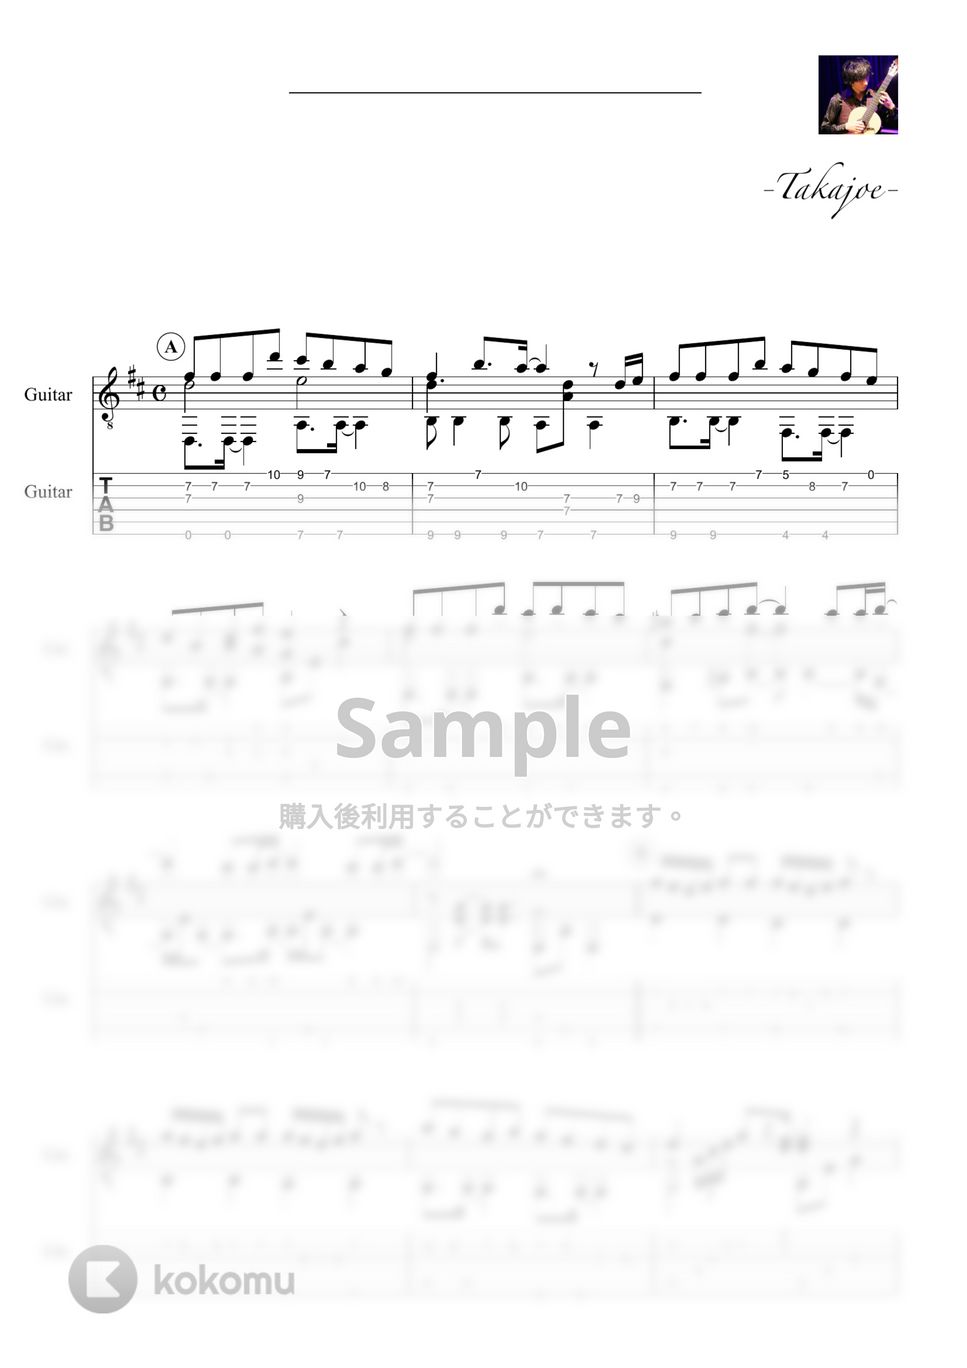 乃木坂46 - Sing Out! by 鷹城-Takajoe-